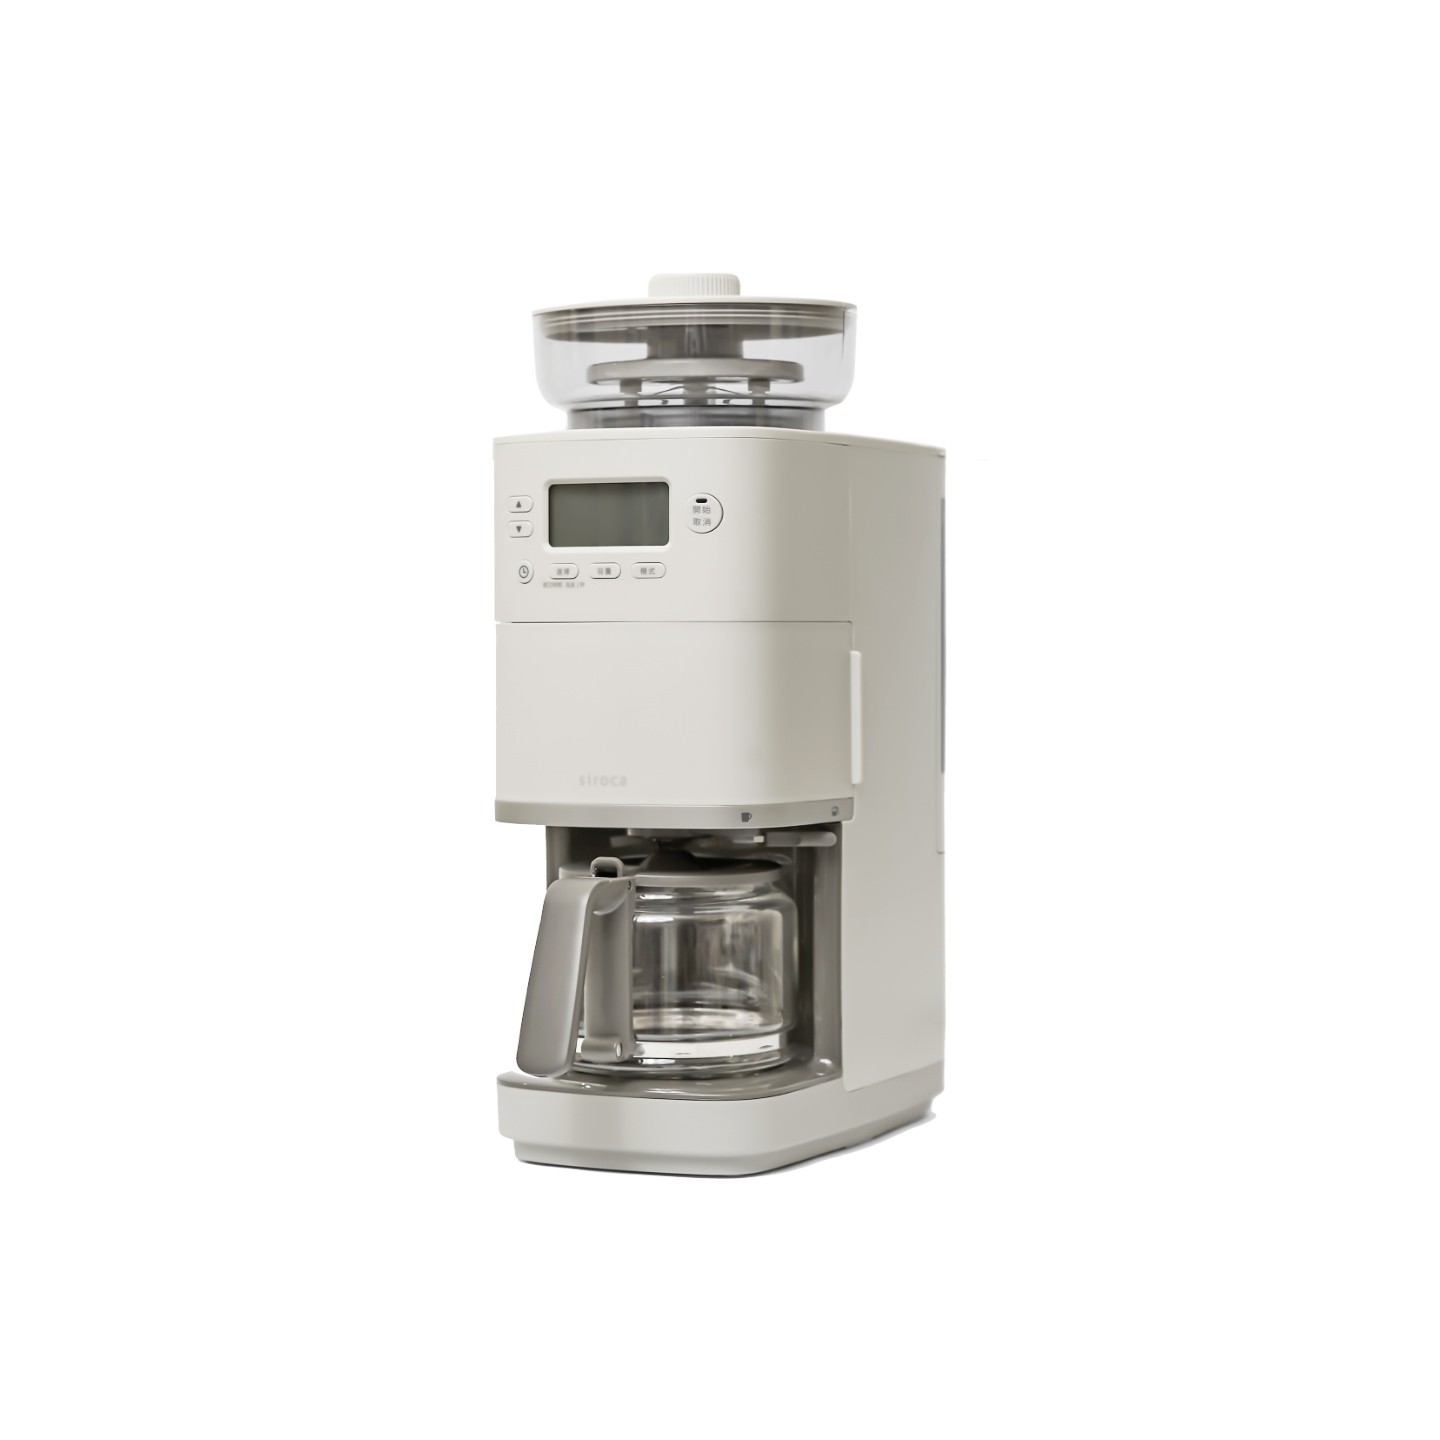 【Siroca】全自動石臼式研磨咖啡機-白灰色 SC-C2510